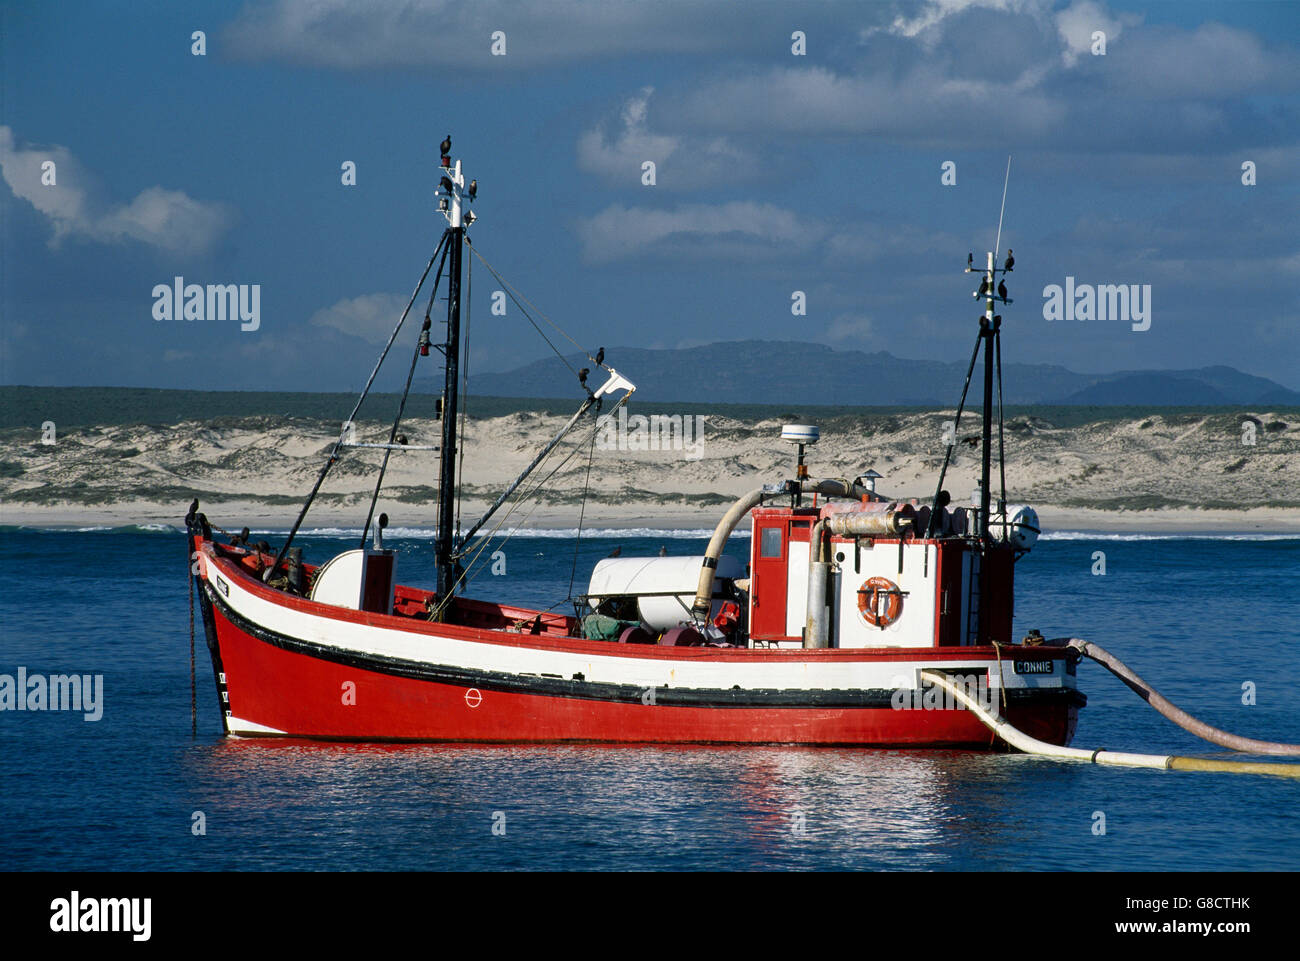 Diamond boat, Port Nolloth, South Africa. Stock Photo